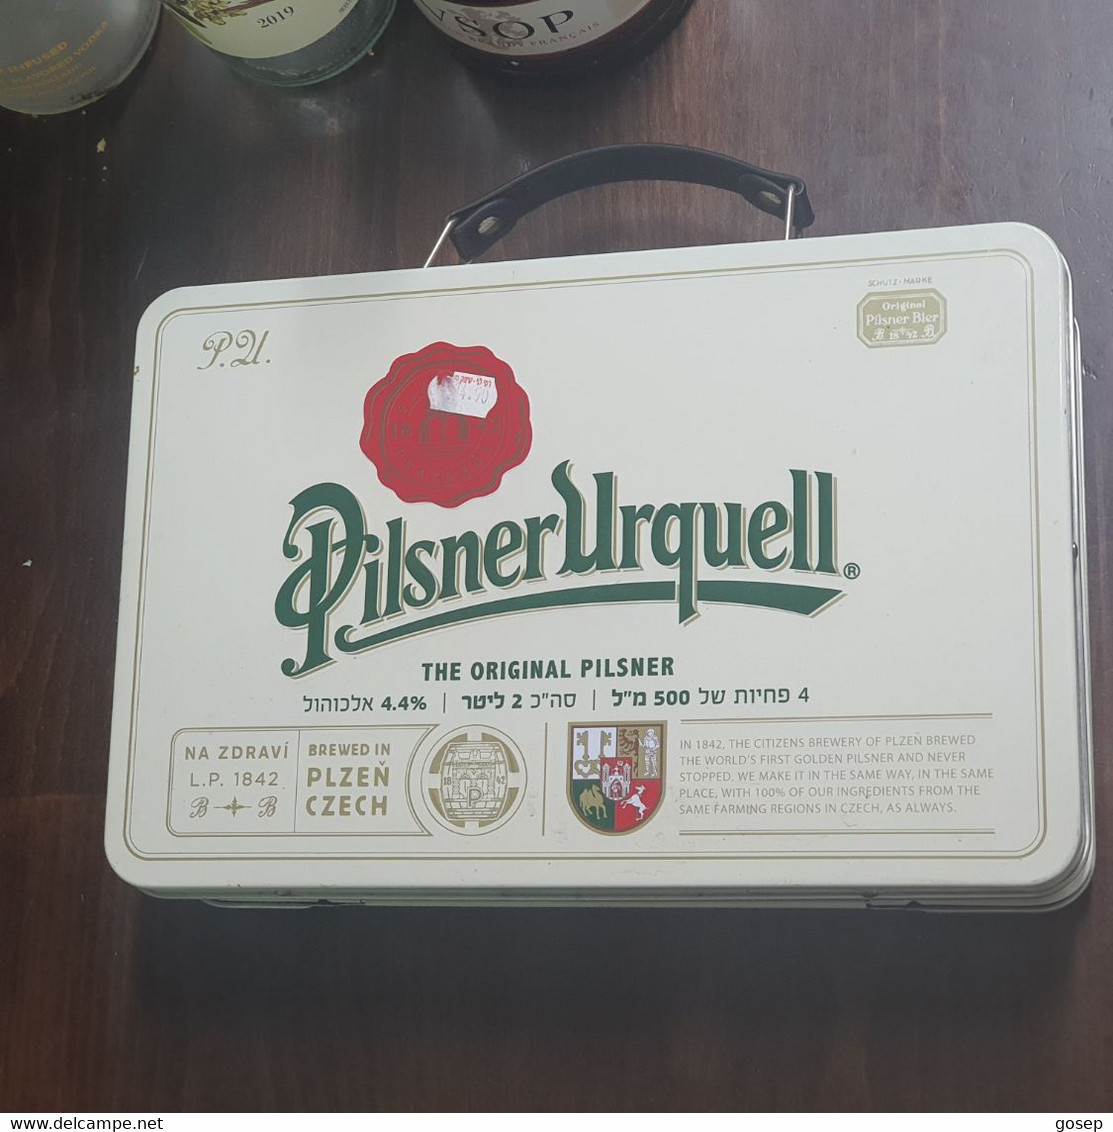 Ceska-pilsner Urquell-the Original Pilsner-BOXES-nikel(Hebrew Label-rite)-(alcohol-4.40%) (Capacity-2 Liter)-new Box - Beer